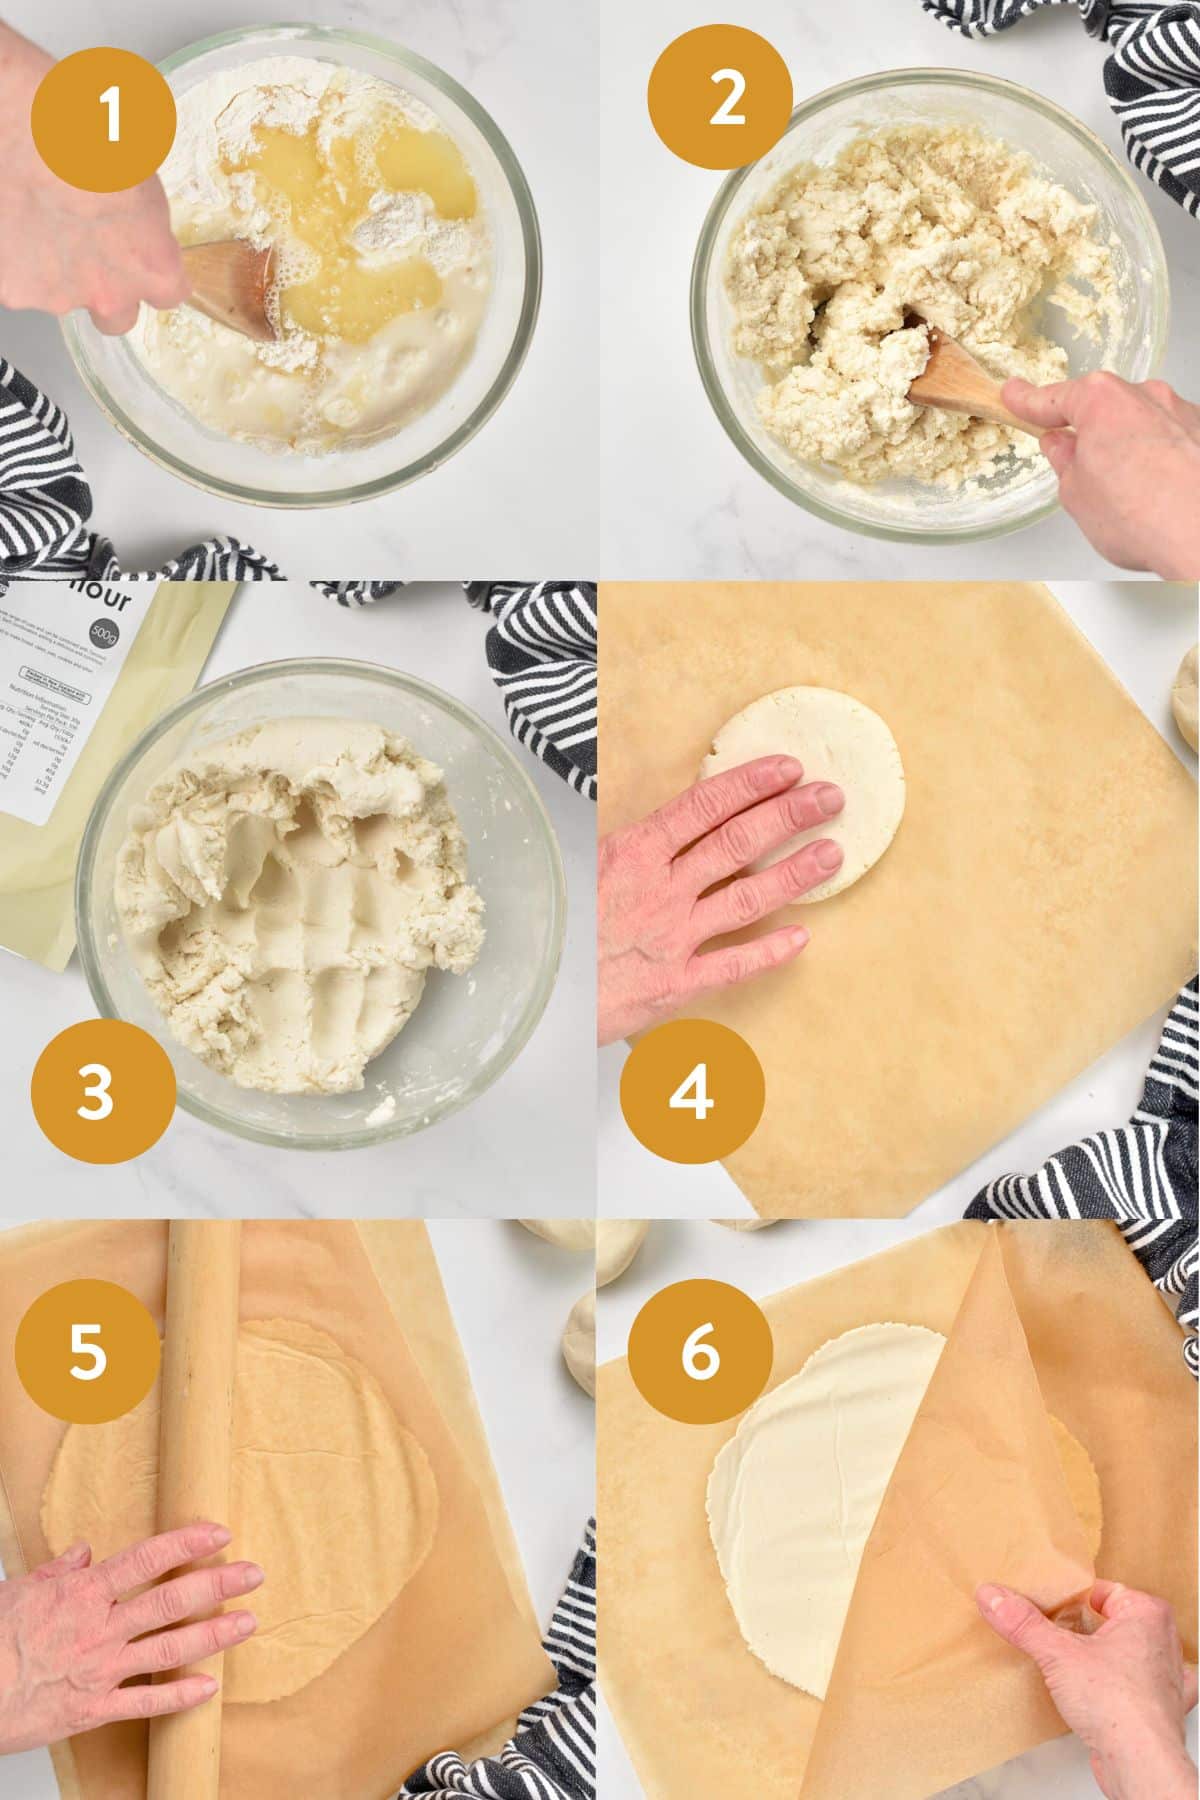 How to make Cassava Flour TortillasHow to make Cassava Flour Tortillas